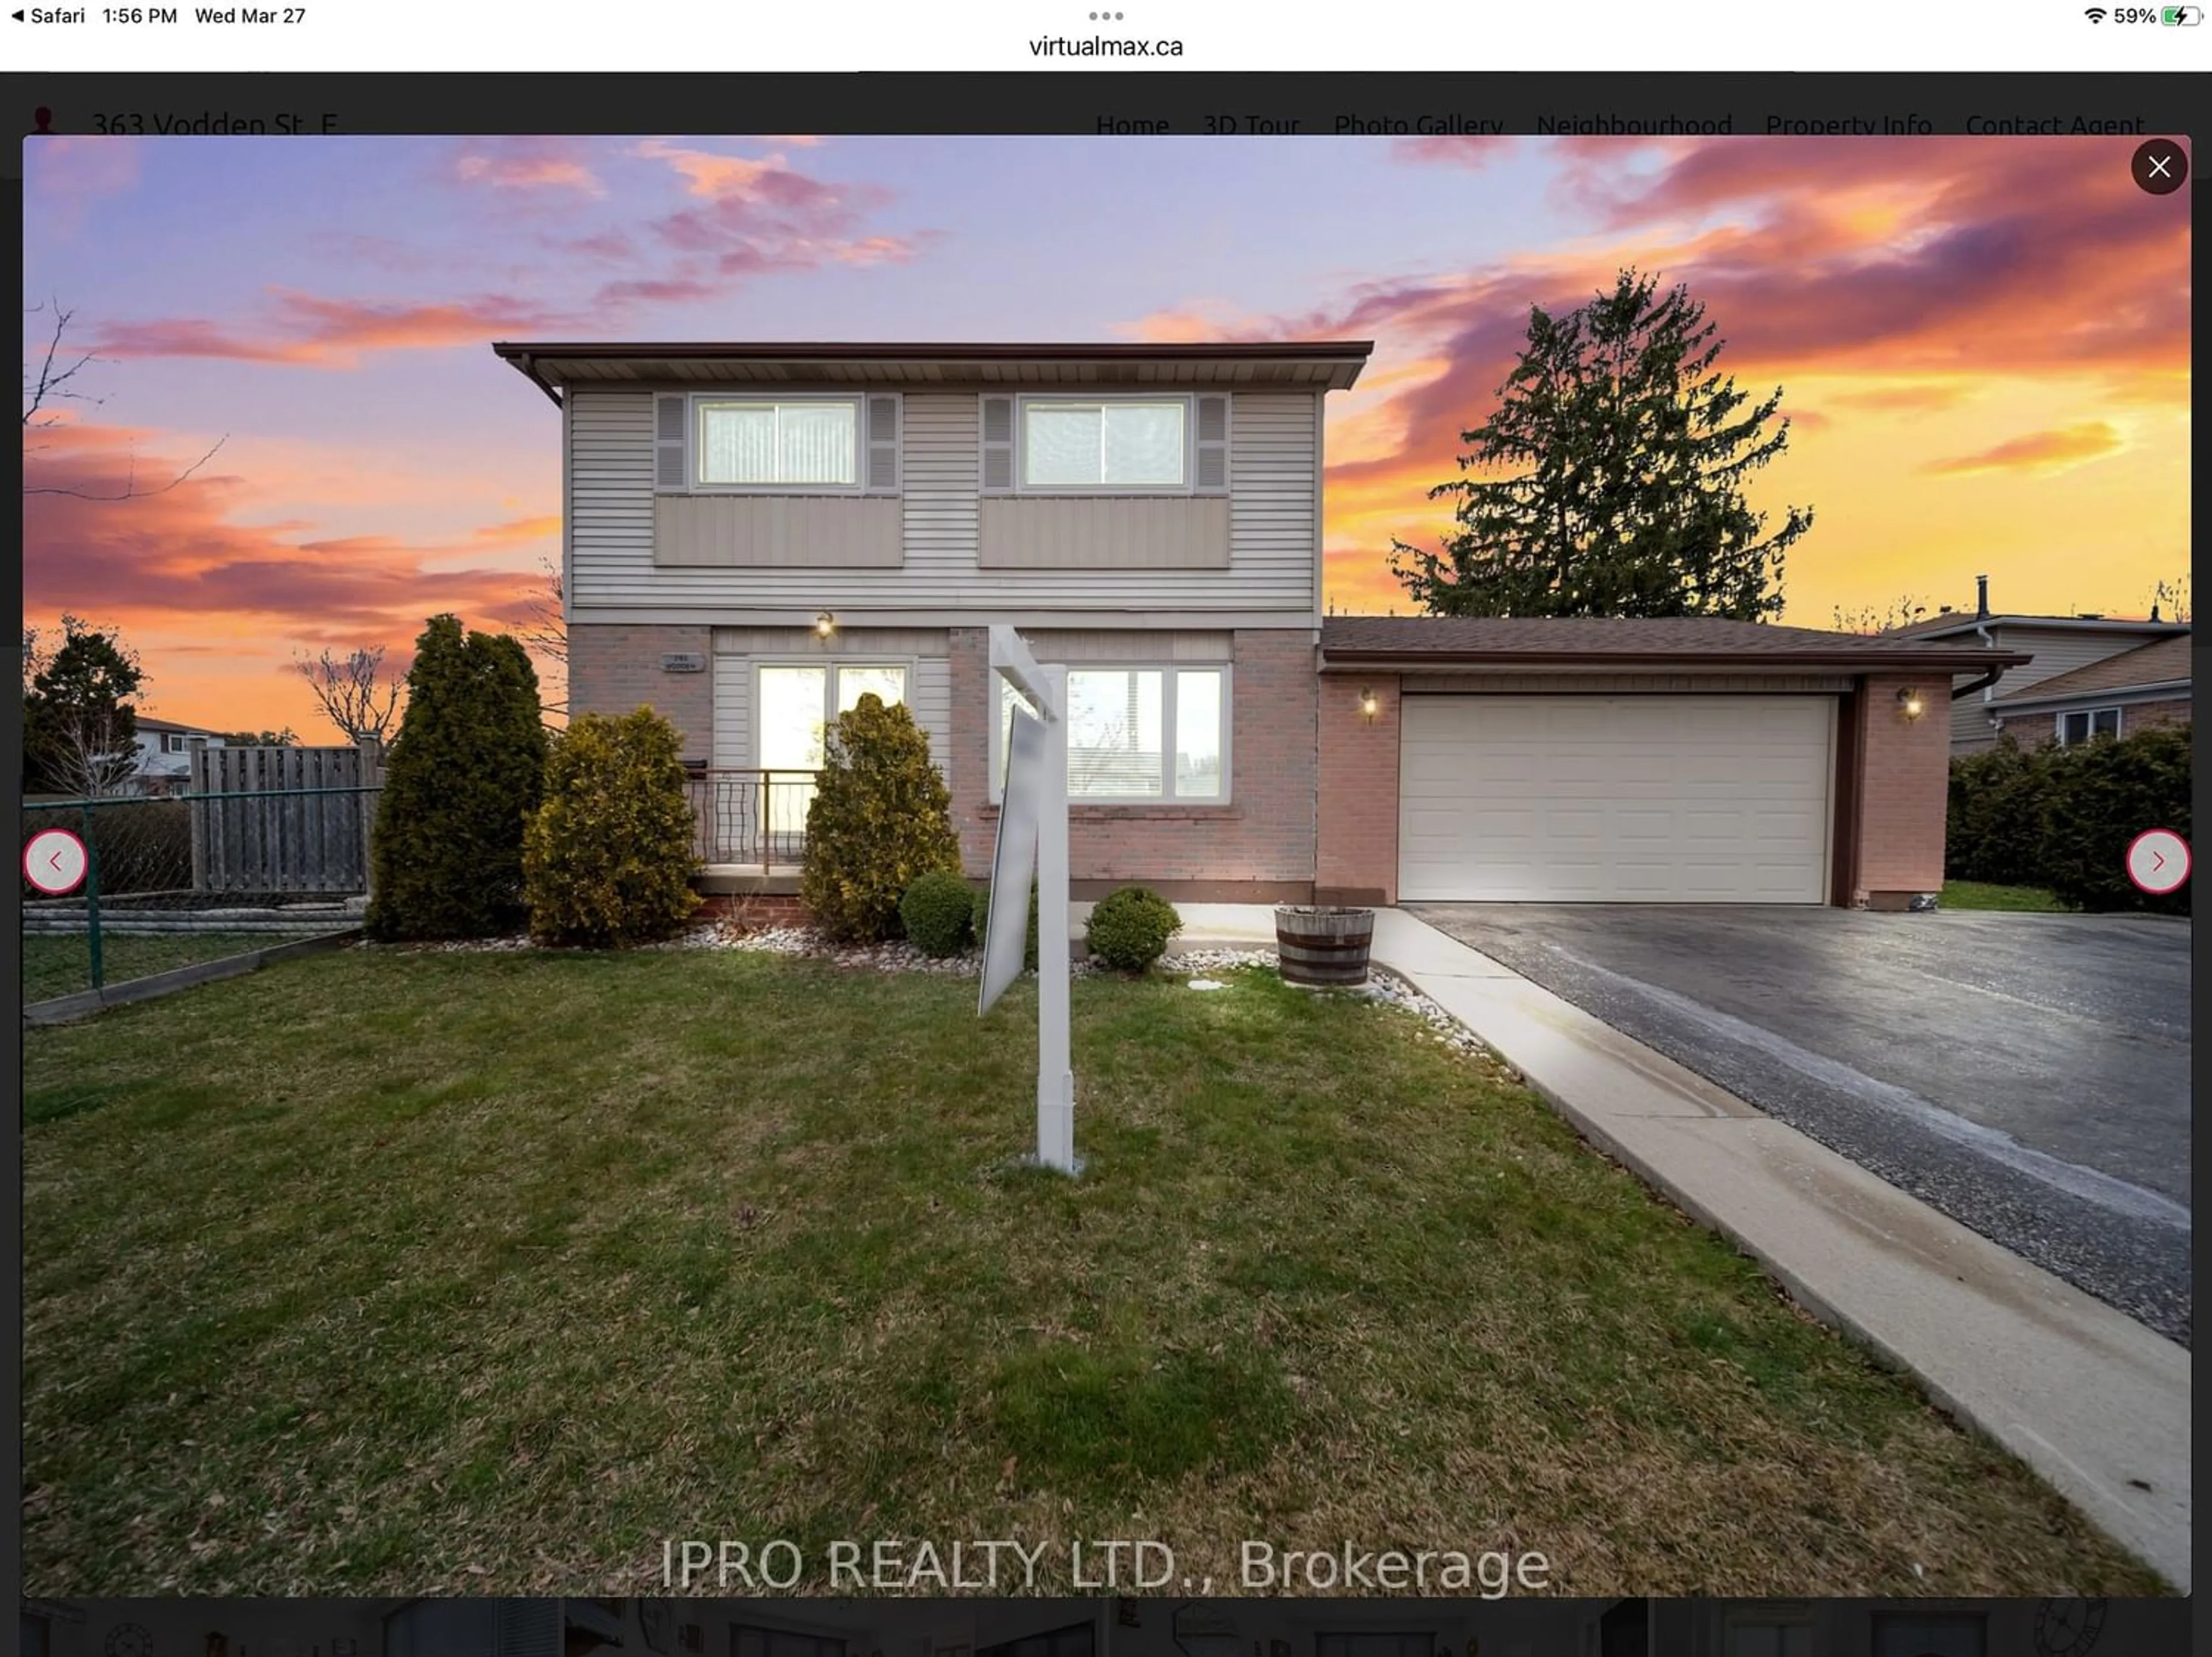 Frontside or backside of a home for 363 Vodden St, Brampton Ontario L6V 1N5